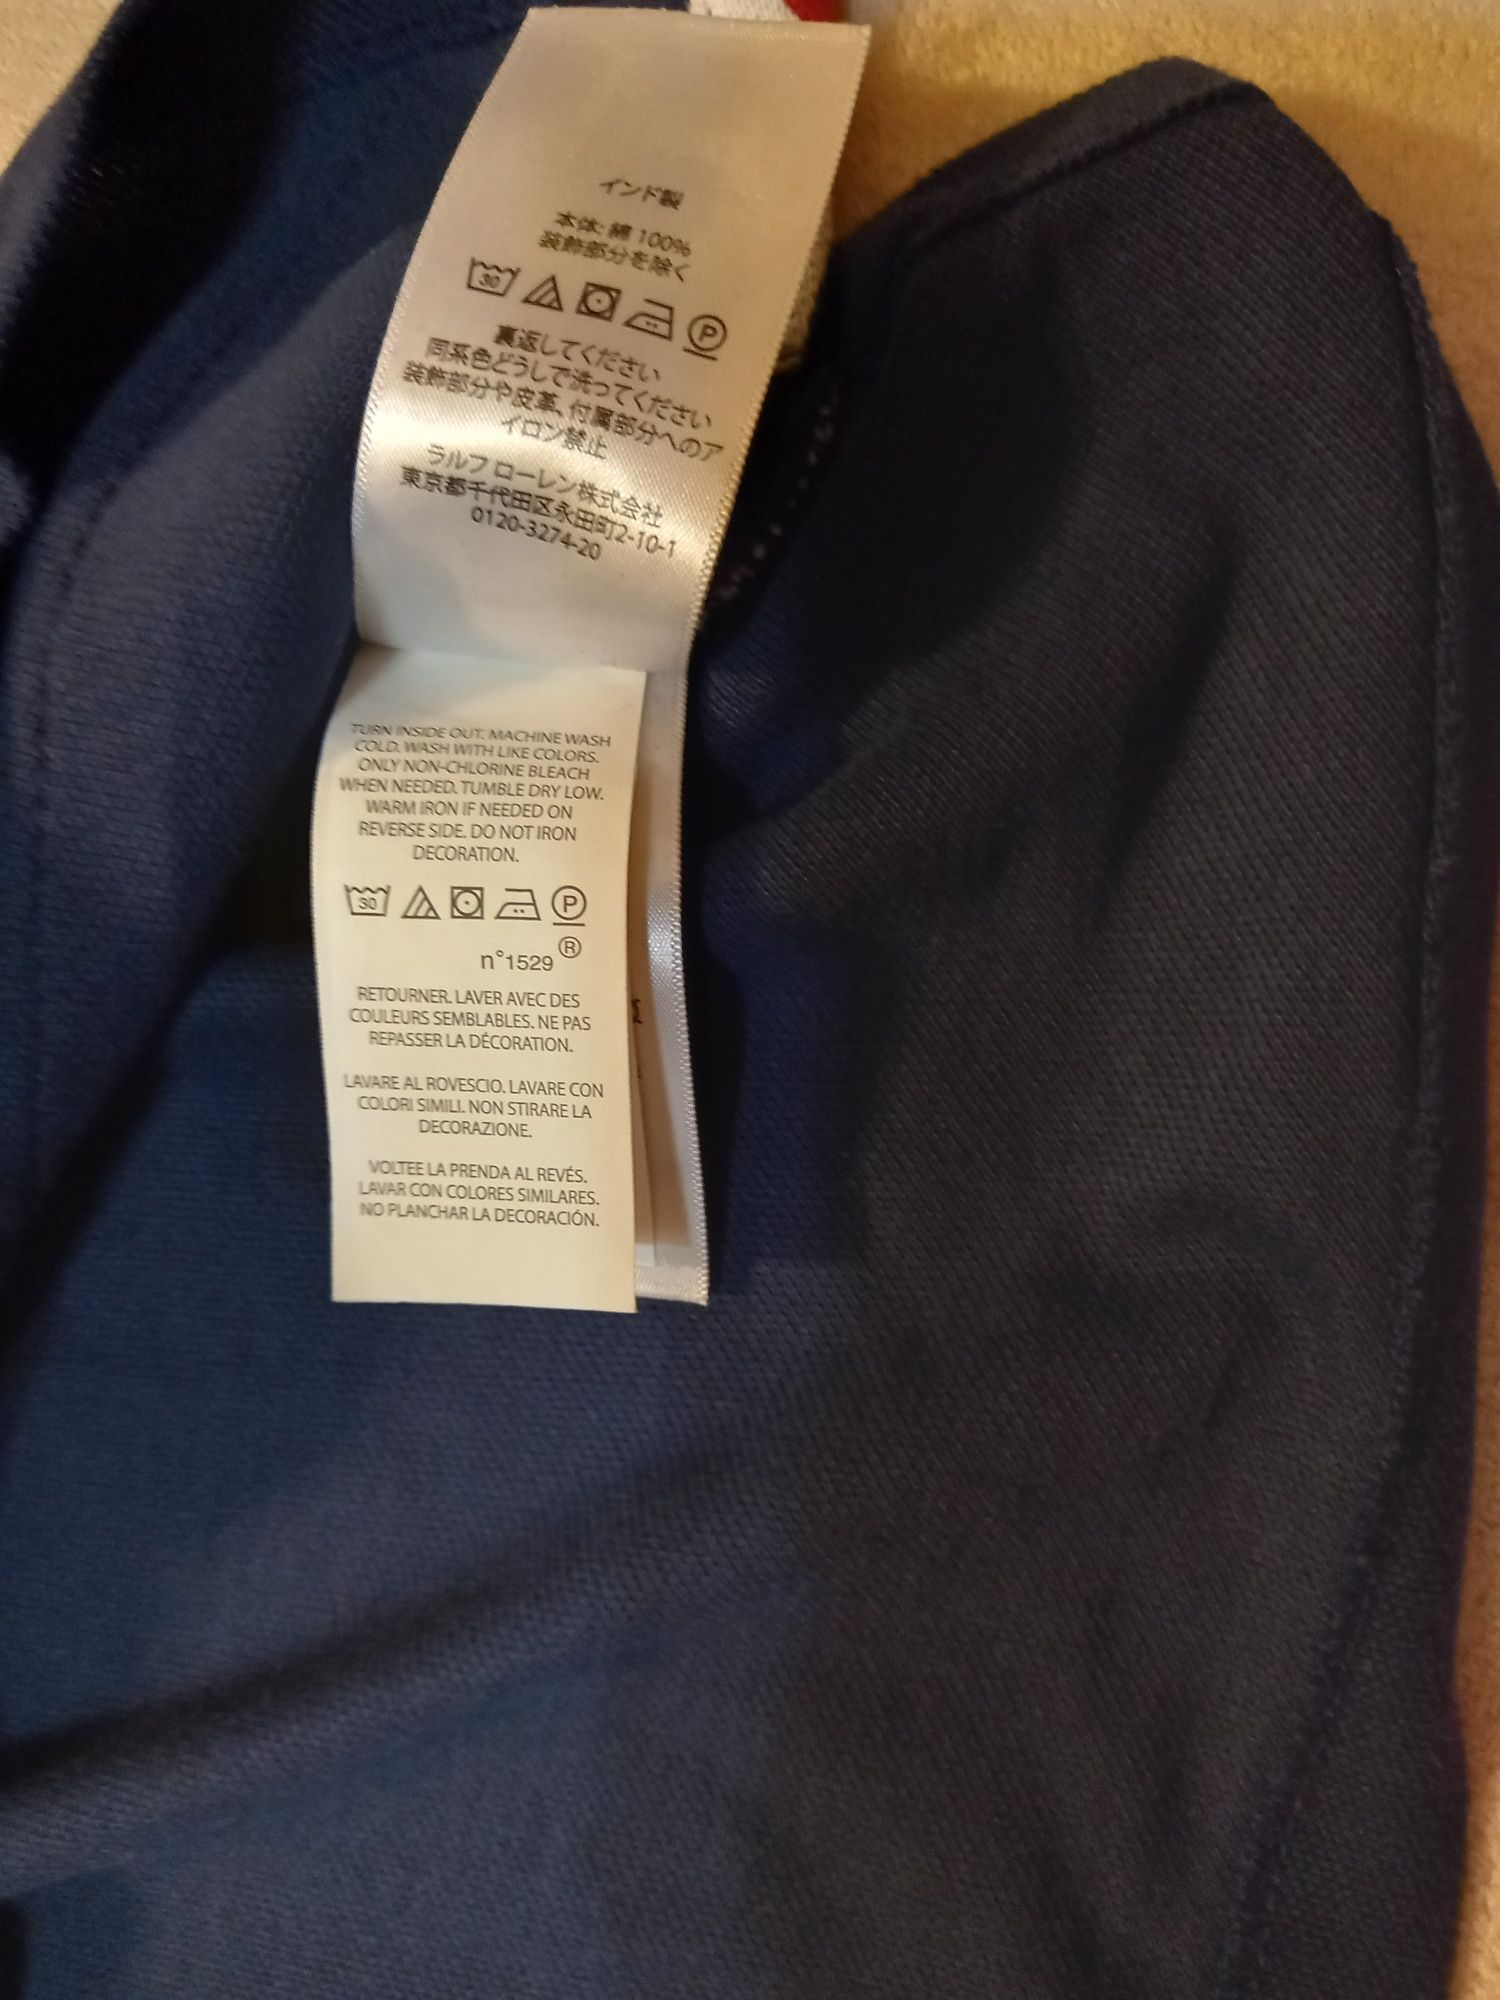 Koszulka Polo Ralph Lauren XL/TG